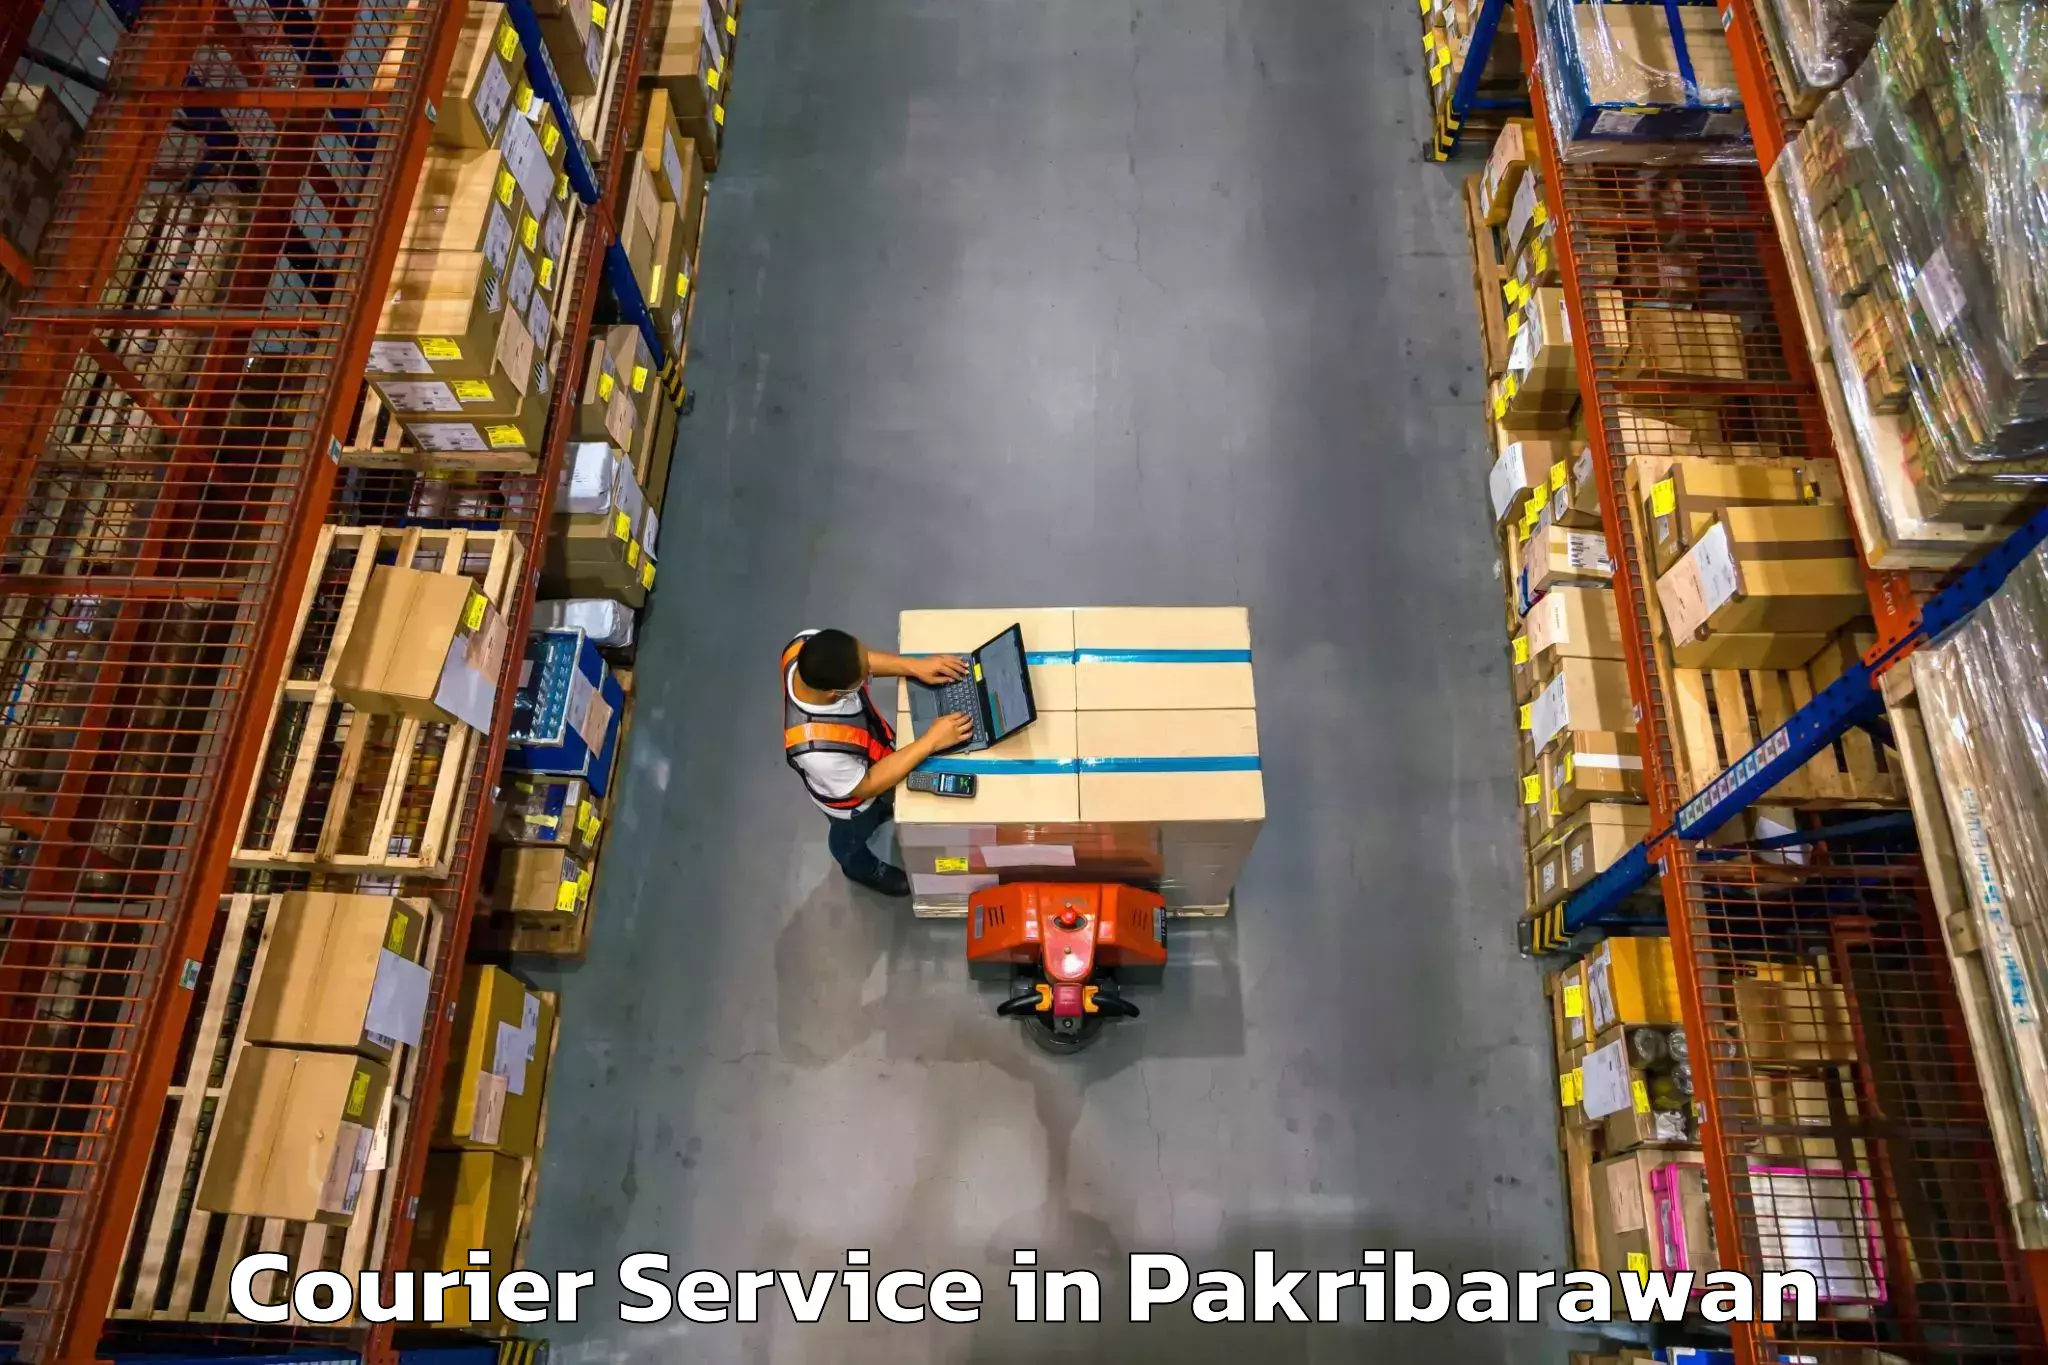 Supply chain efficiency in Pakribarawan